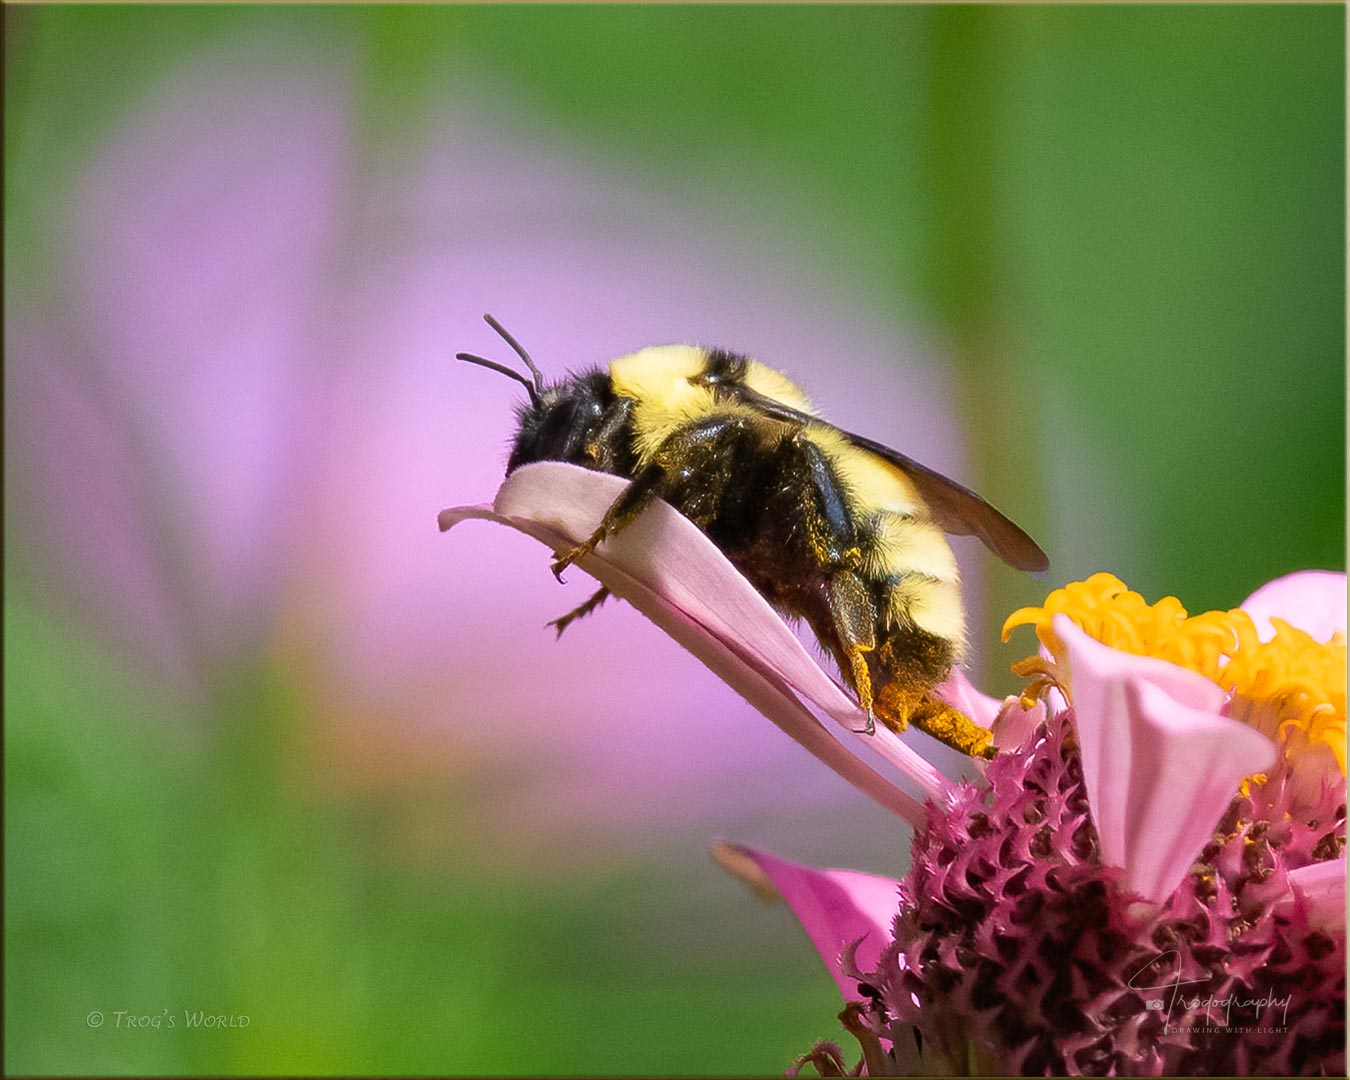 Bumblebee sleeping on a flower petal